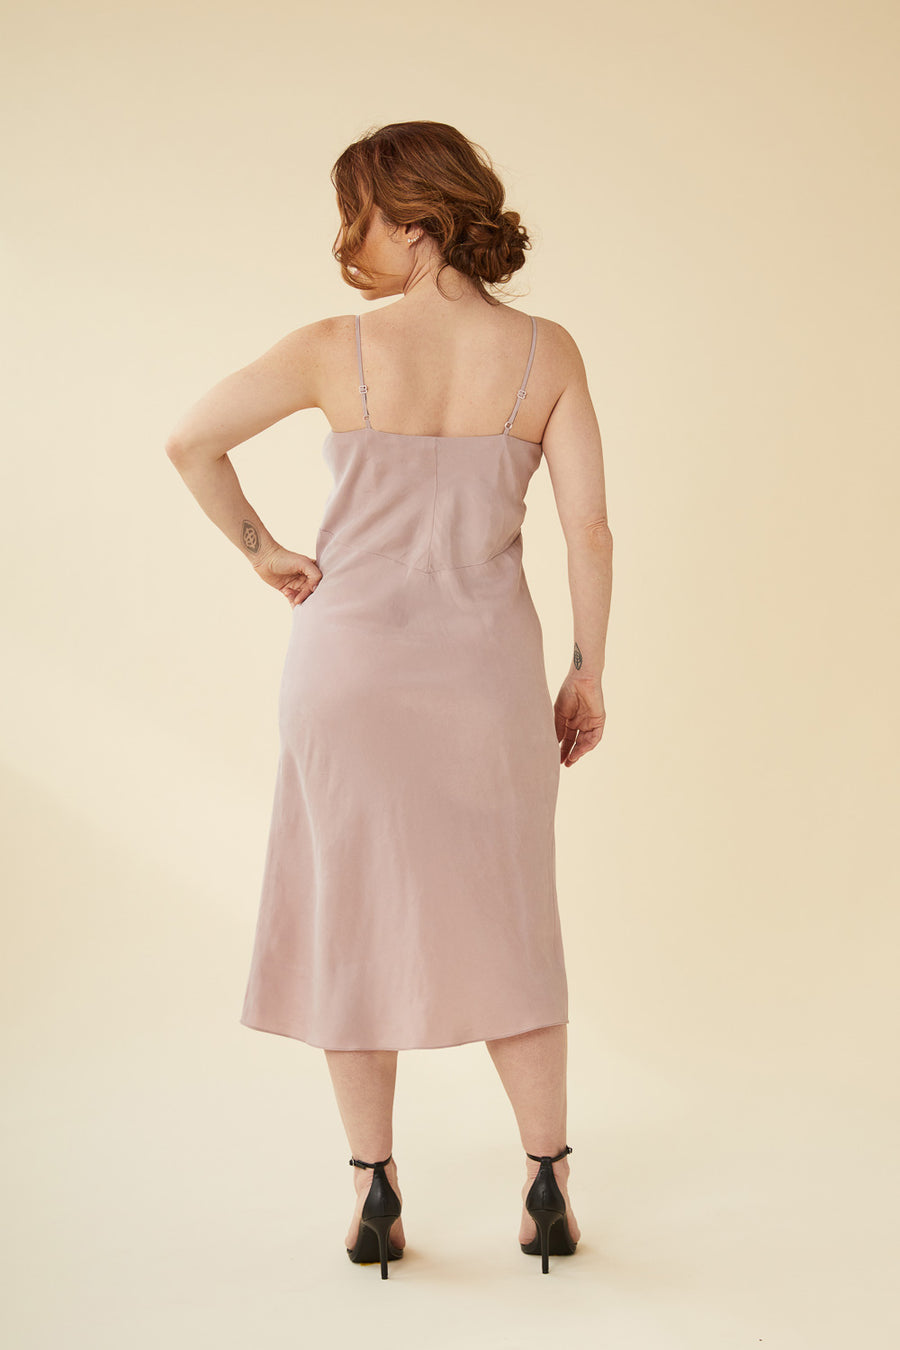 Slips lace silk cotton bias cut undergarment dress –